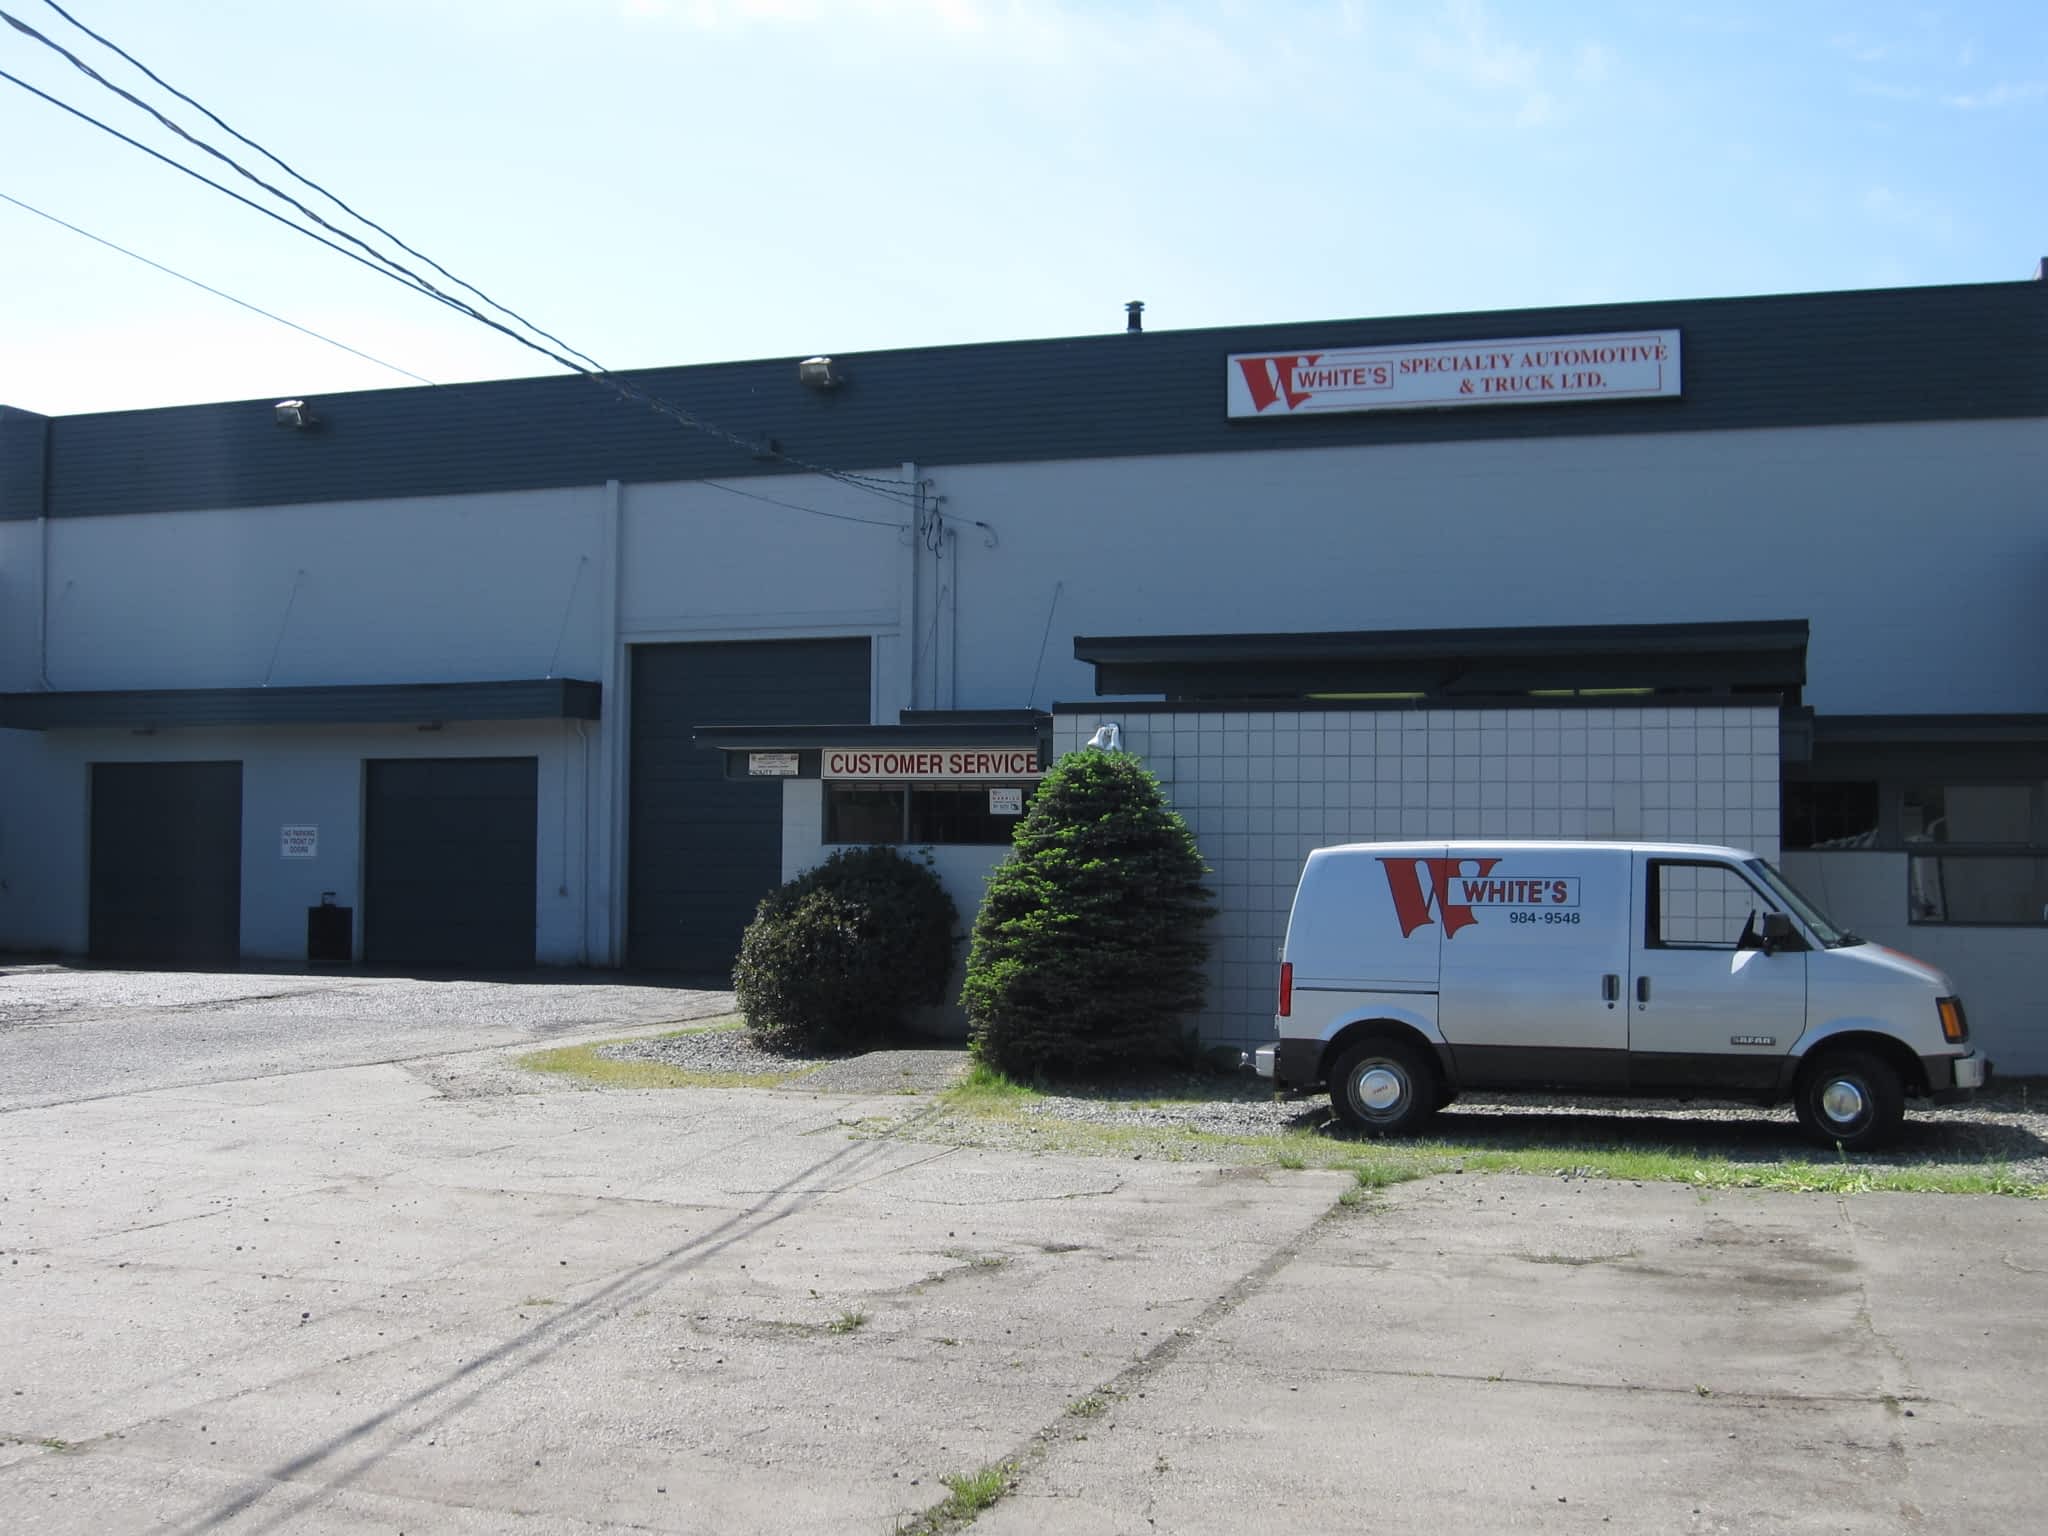 photo White's Specialty Automotive & Truck Ltd